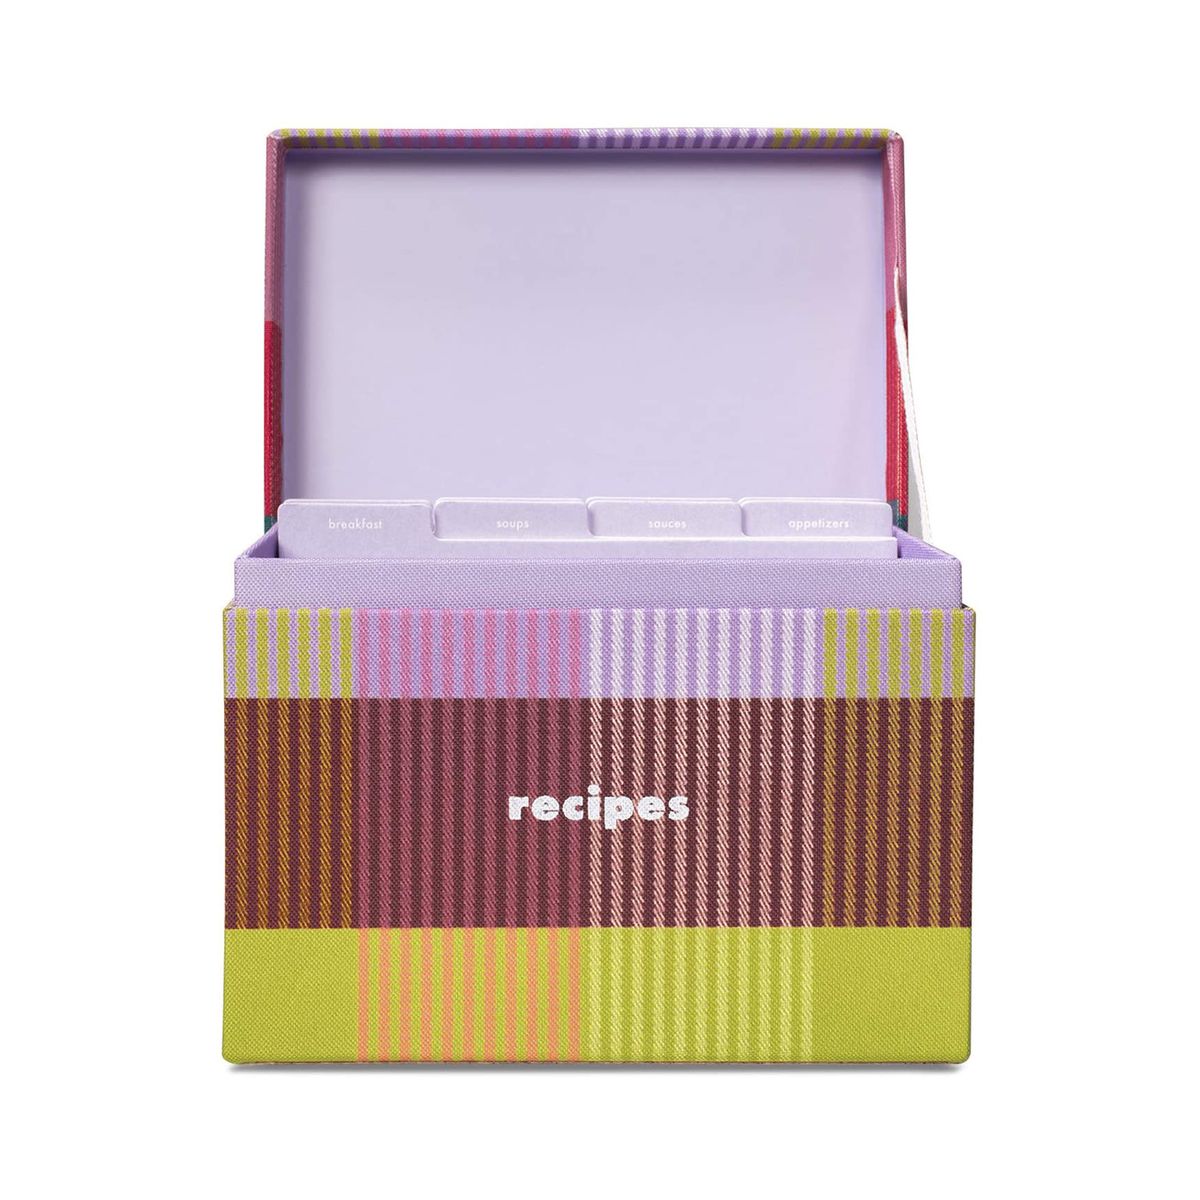 Bright Stripes Kate Spade Recipe Box